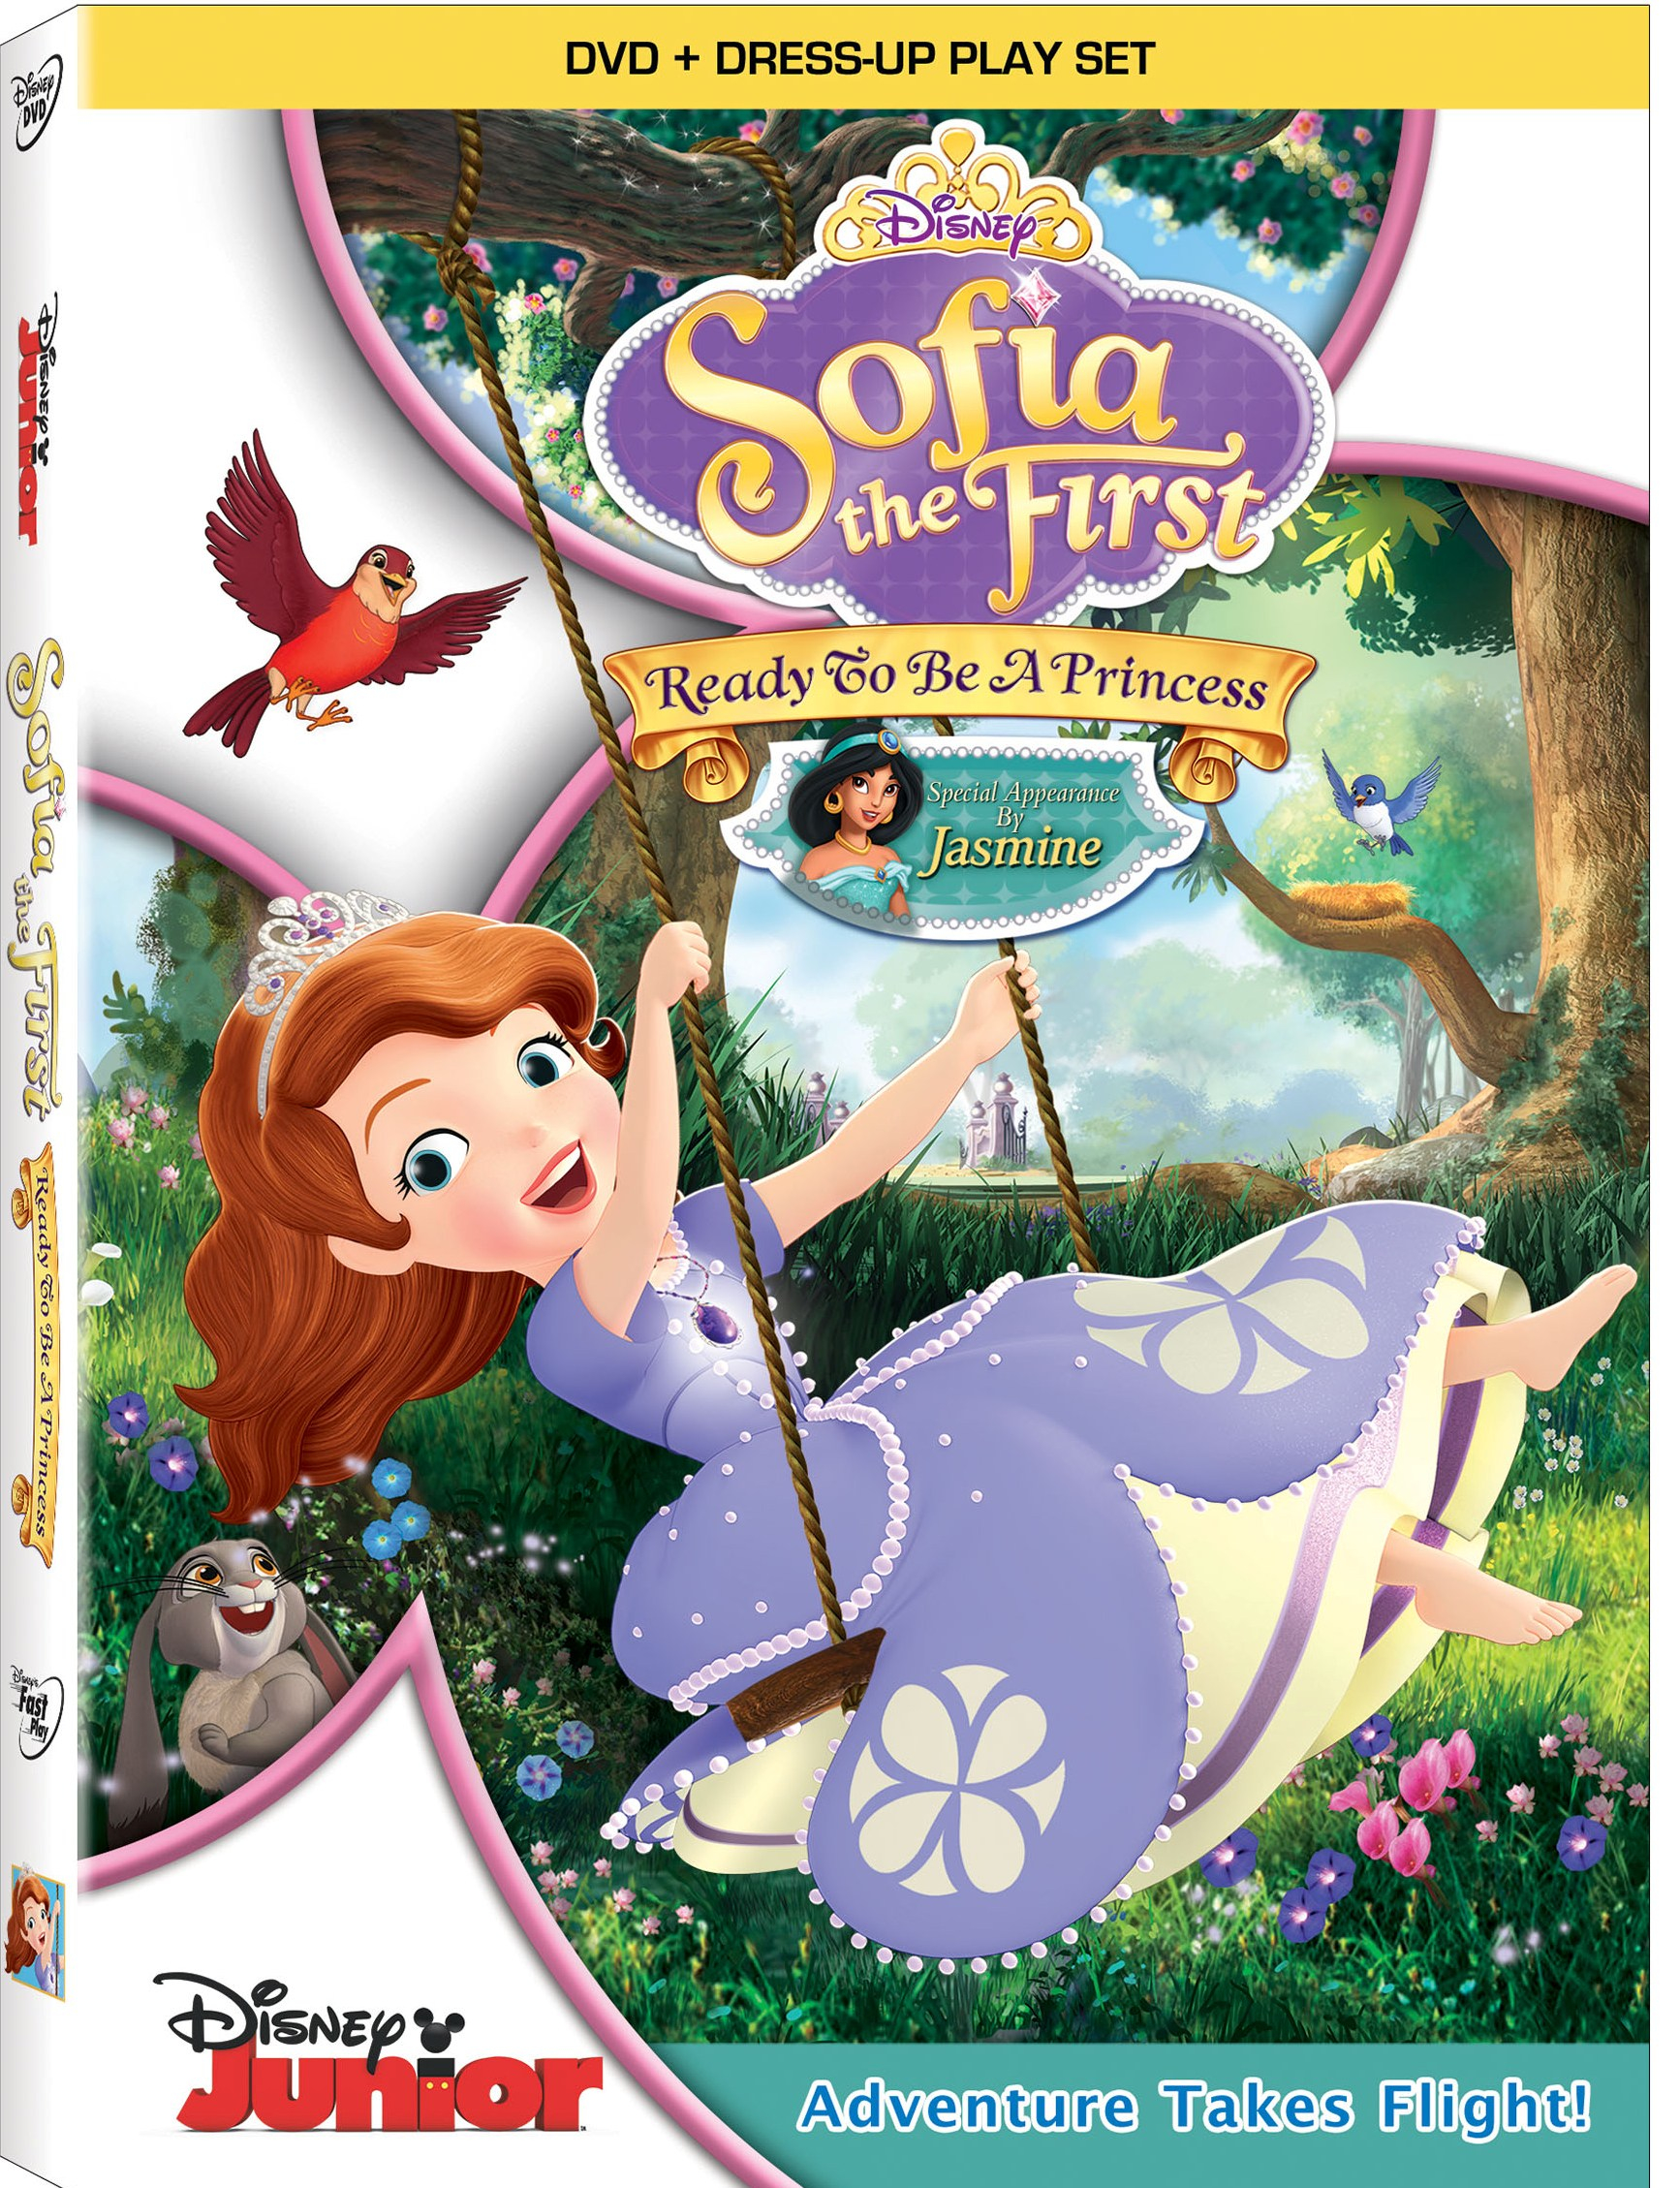 Disney's "Sofia The First: Ready To Be A Princess" DVD ...